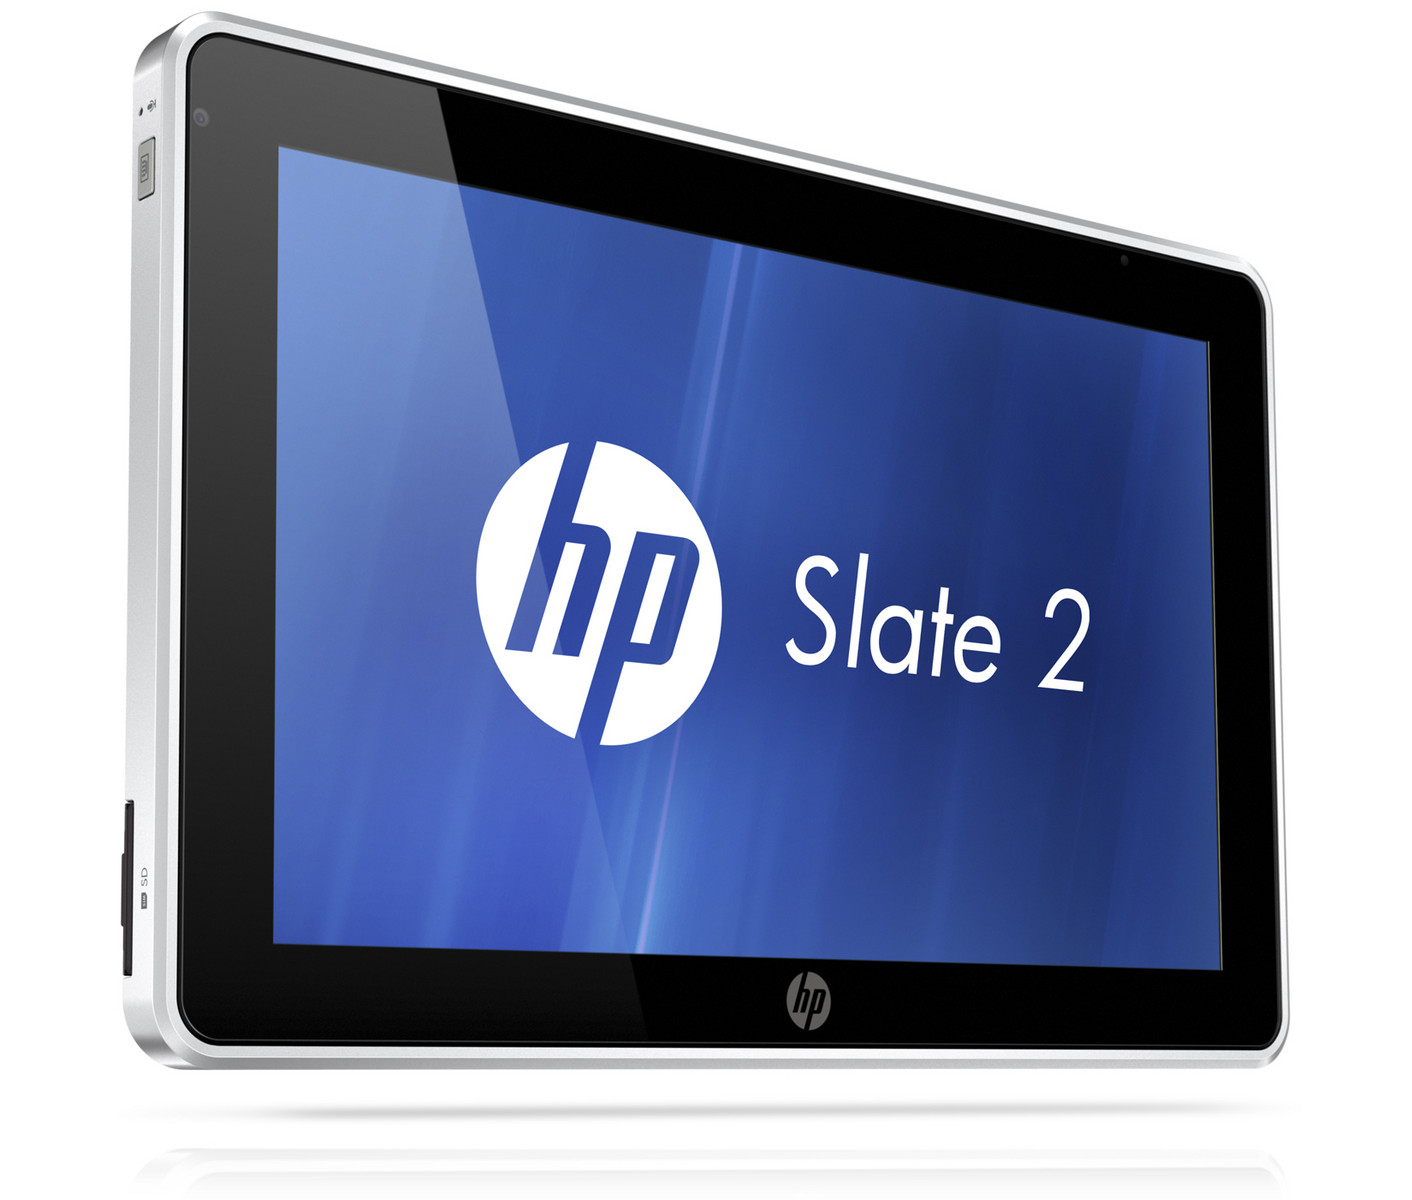  HP Slate 2 Tablet mit Windows 7 vorgestellt 